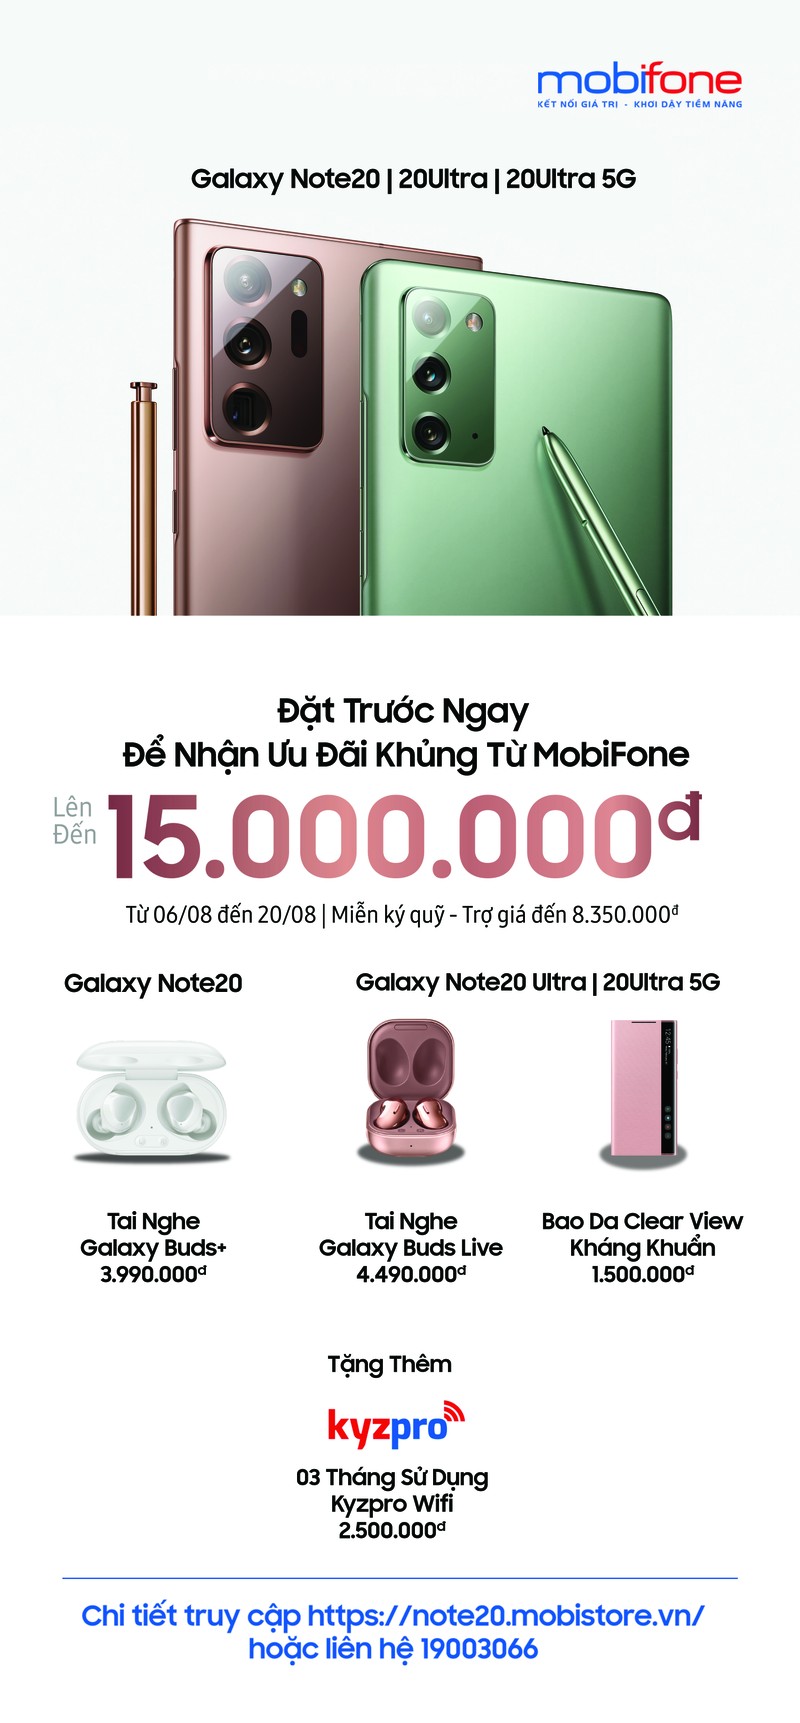 Khach hang dat truoc Galaxy Note 20 va nhan qua “khung” tu MobiFone